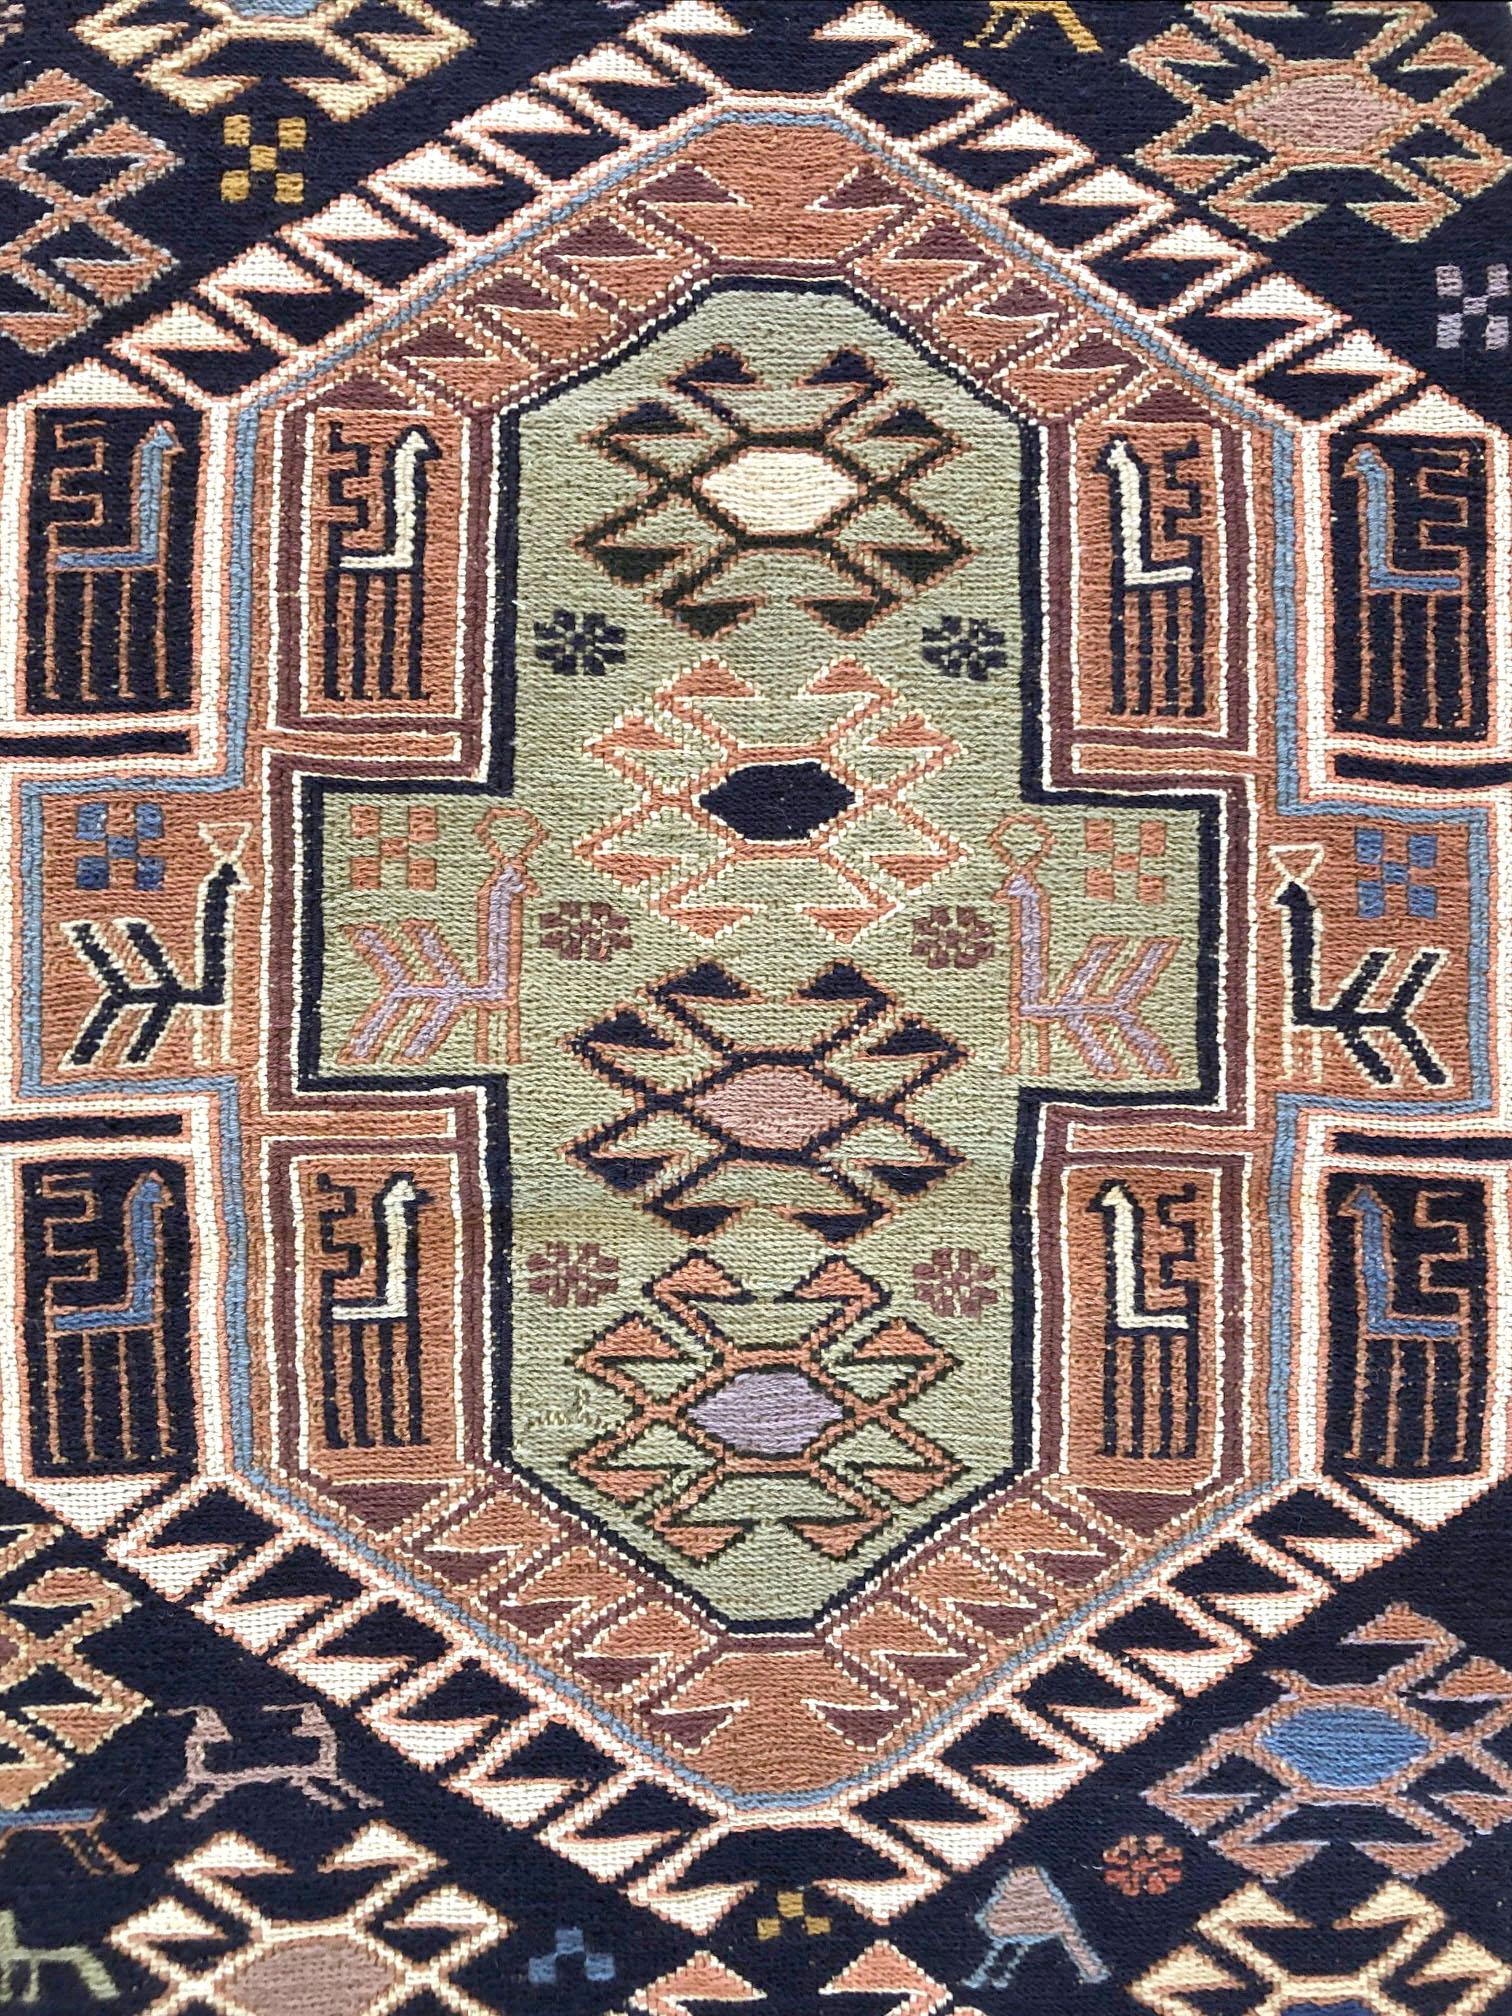 Contemporary Persian Sumak Multi-Color Tribal Kilim